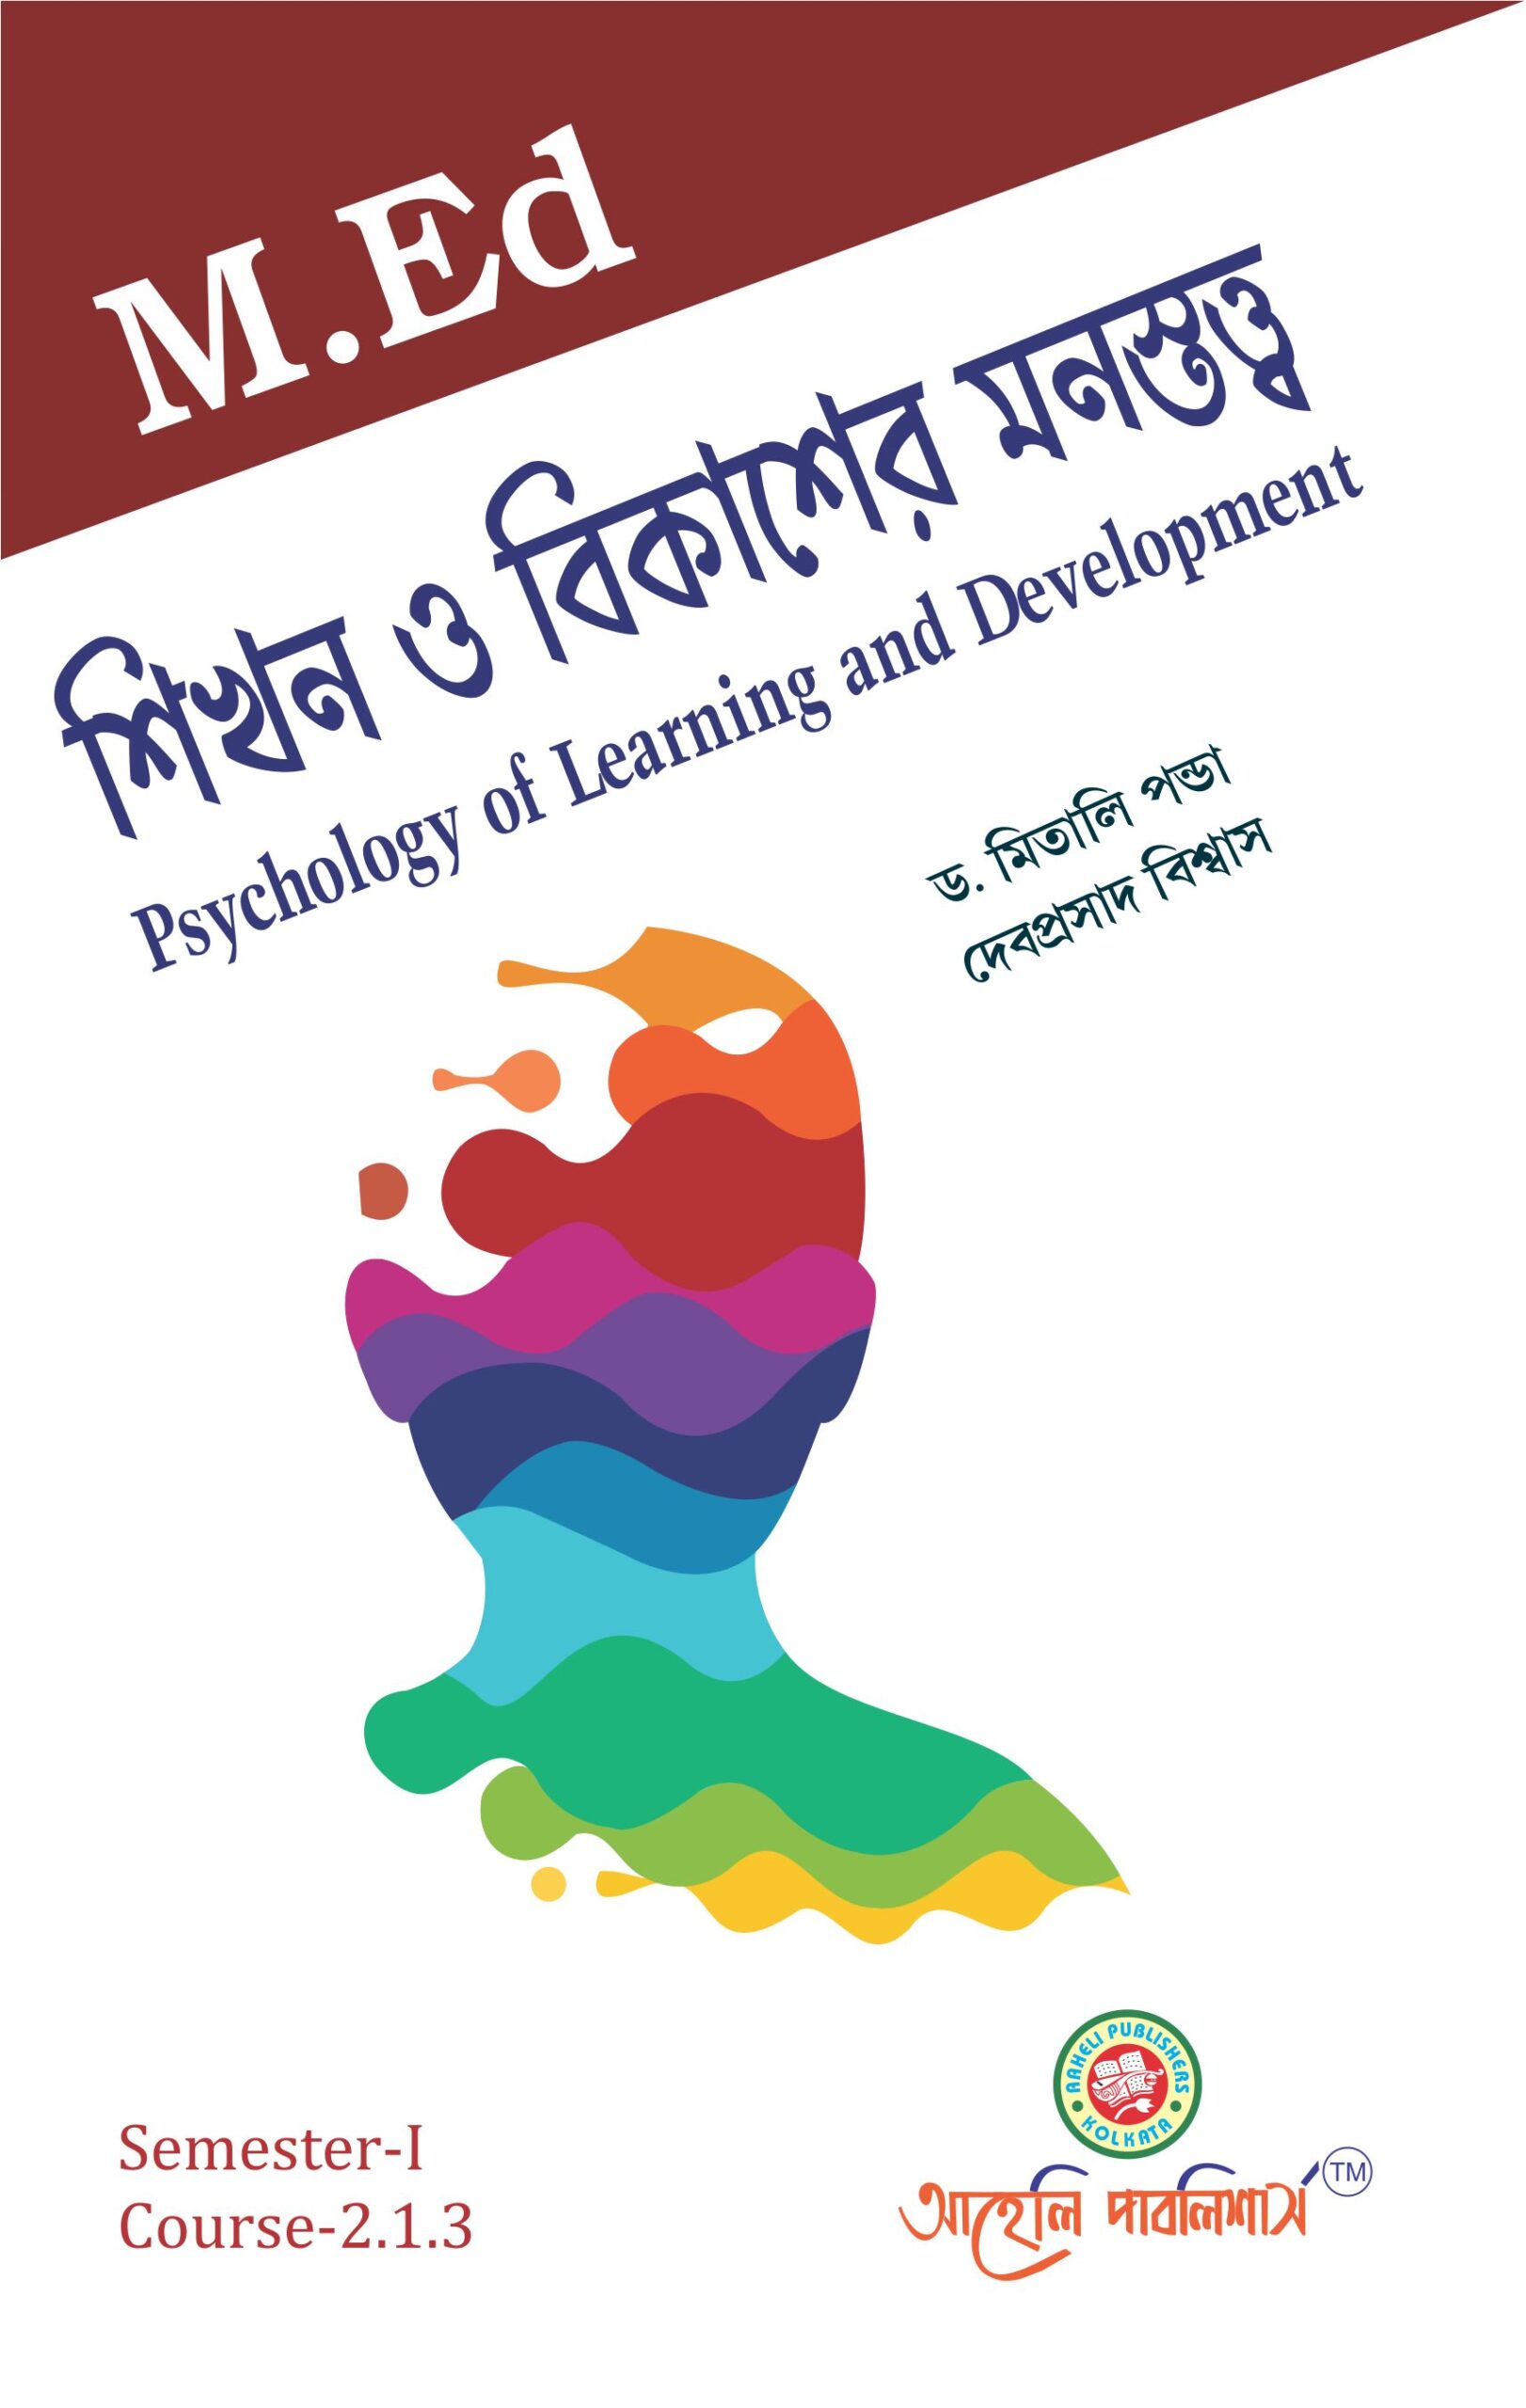 Psychology of Learning and Development Bengali Version 1st Semester